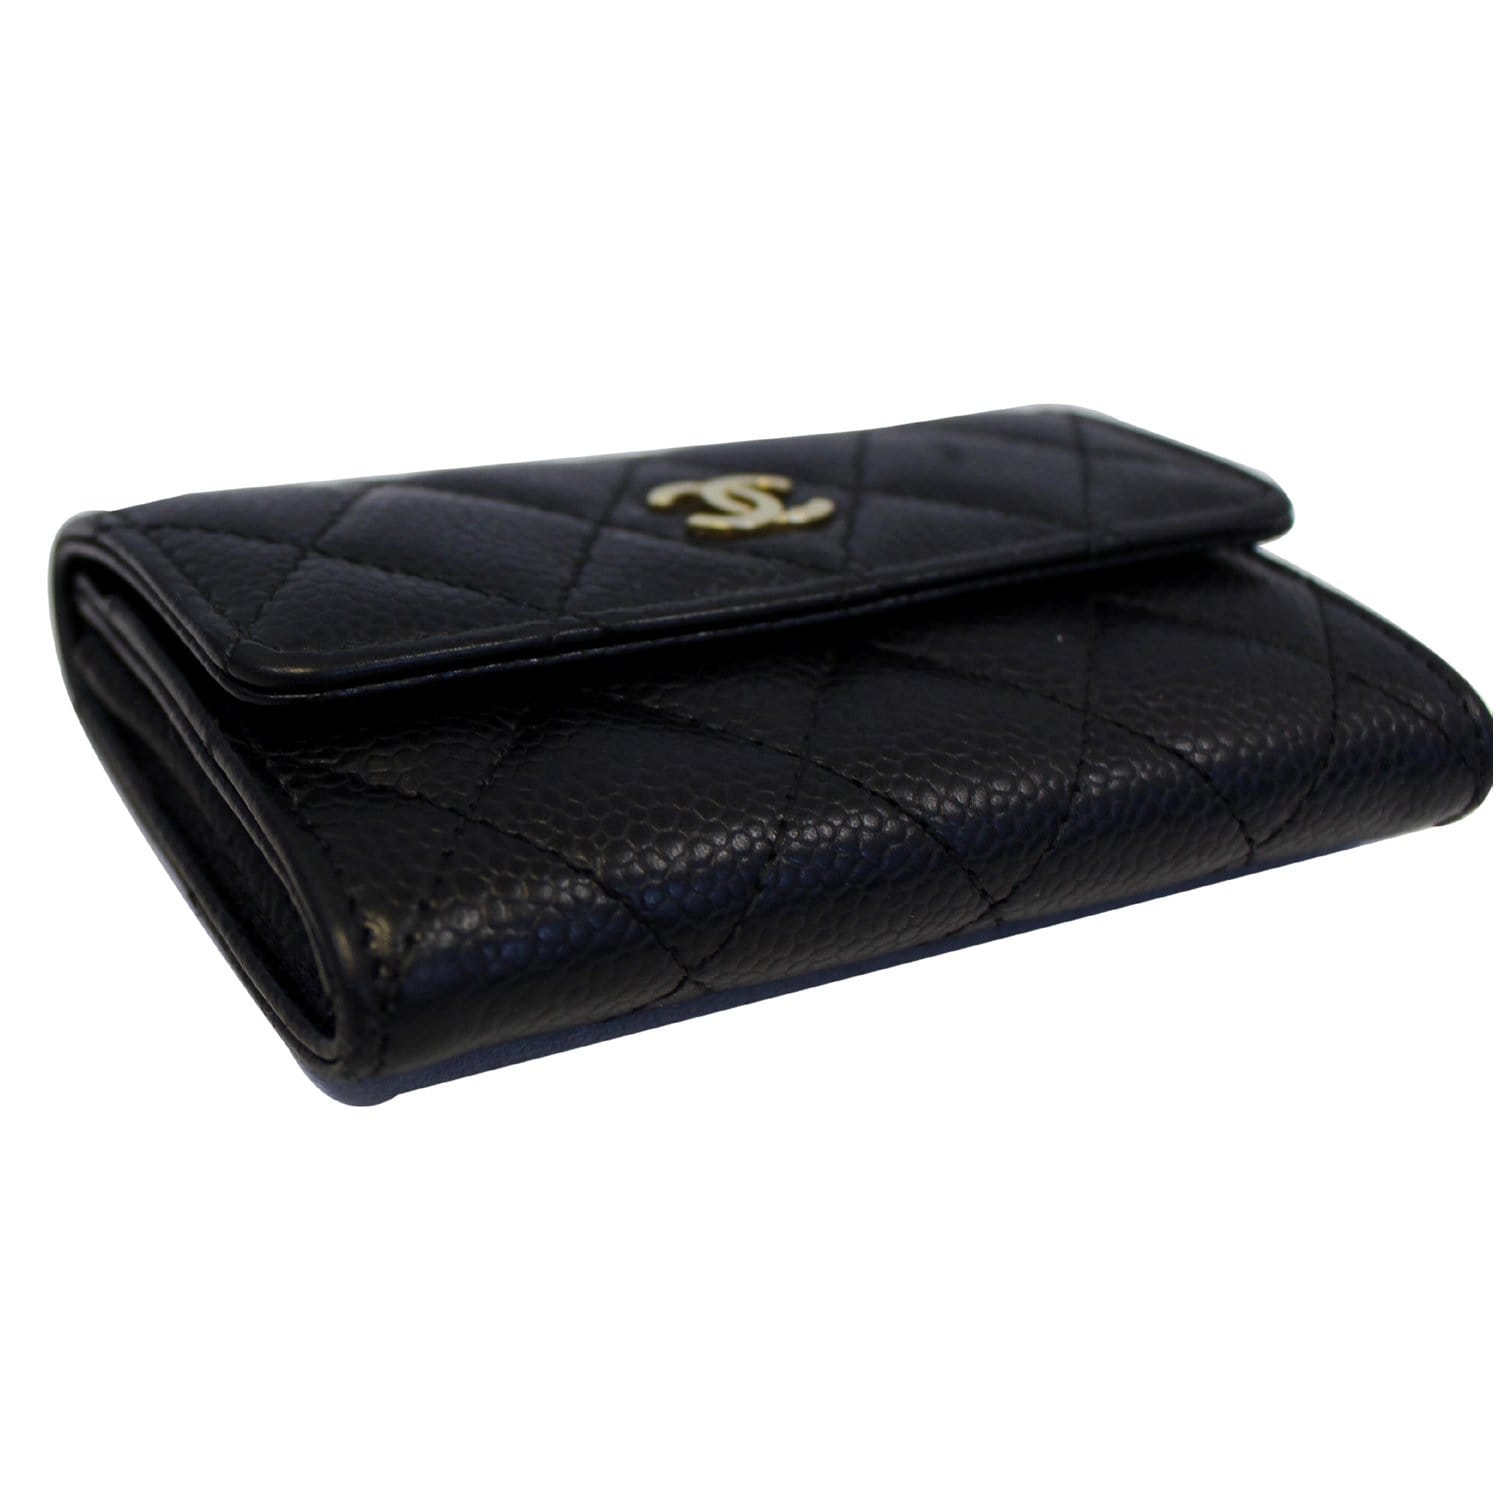 Chanel Le boy Caviar Leather Flap Card Holder Black - NOBLEMARS